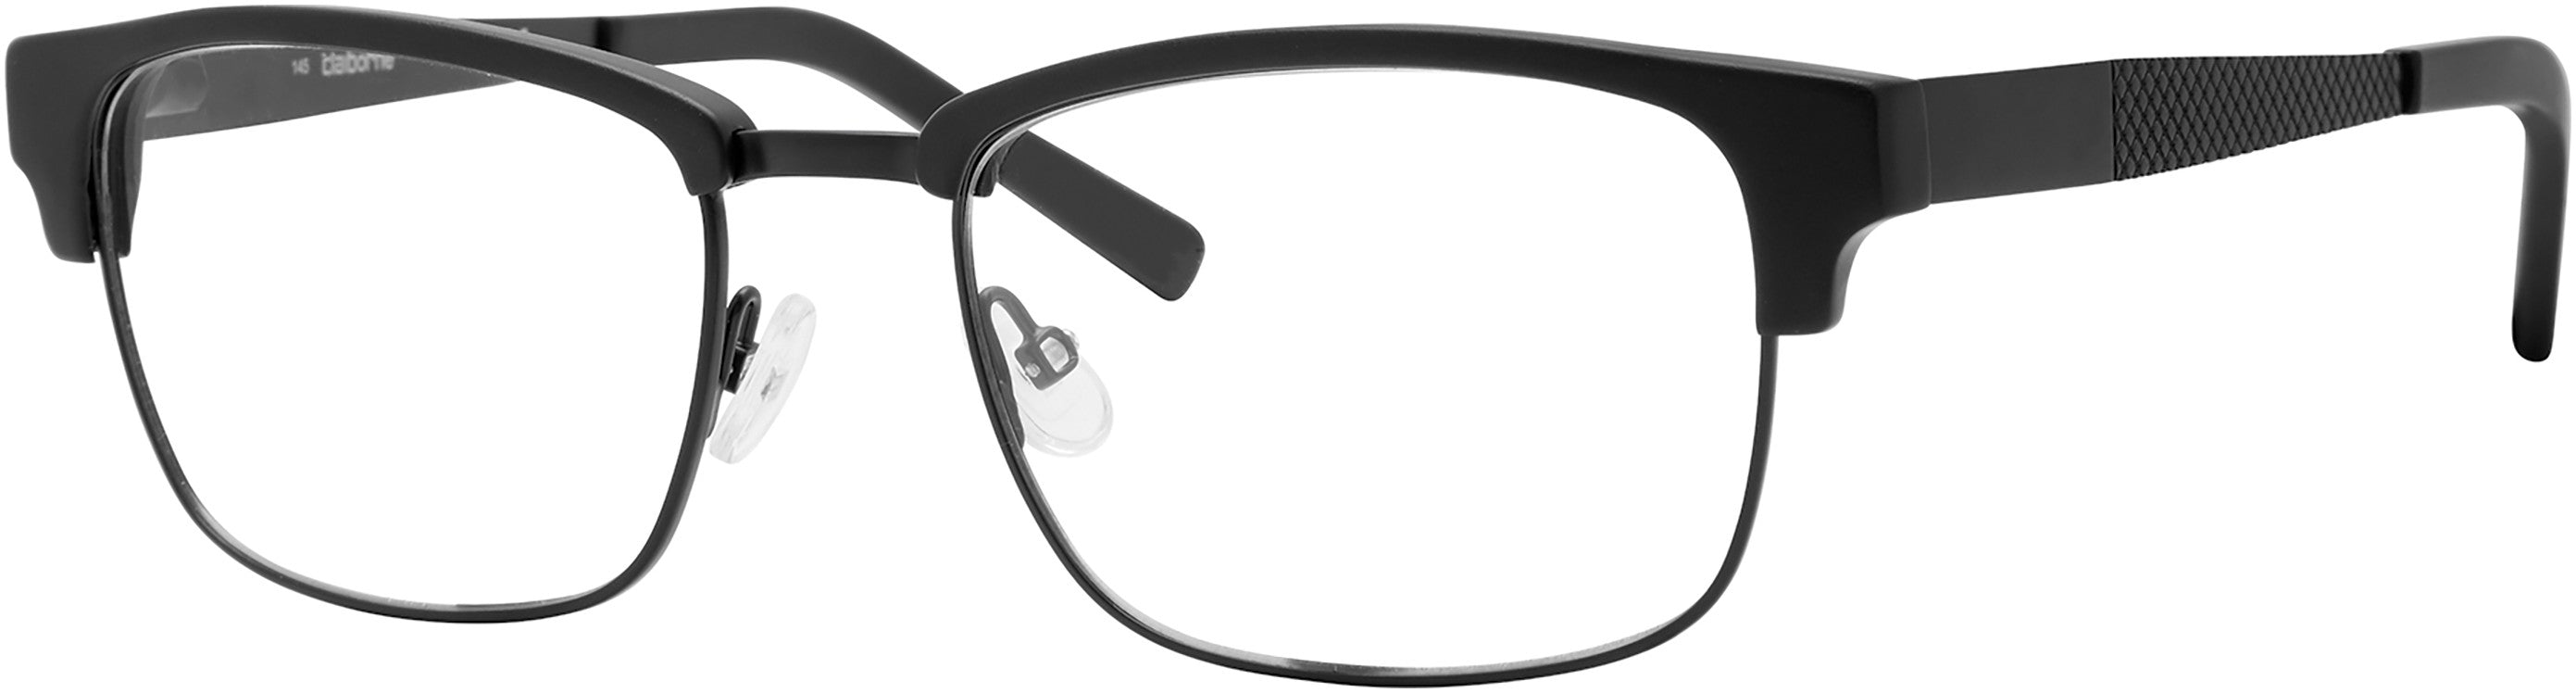  Claiborne 247 Rectangular Eyeglasses 0003-0003  Matte Black (00 Demo Lens)